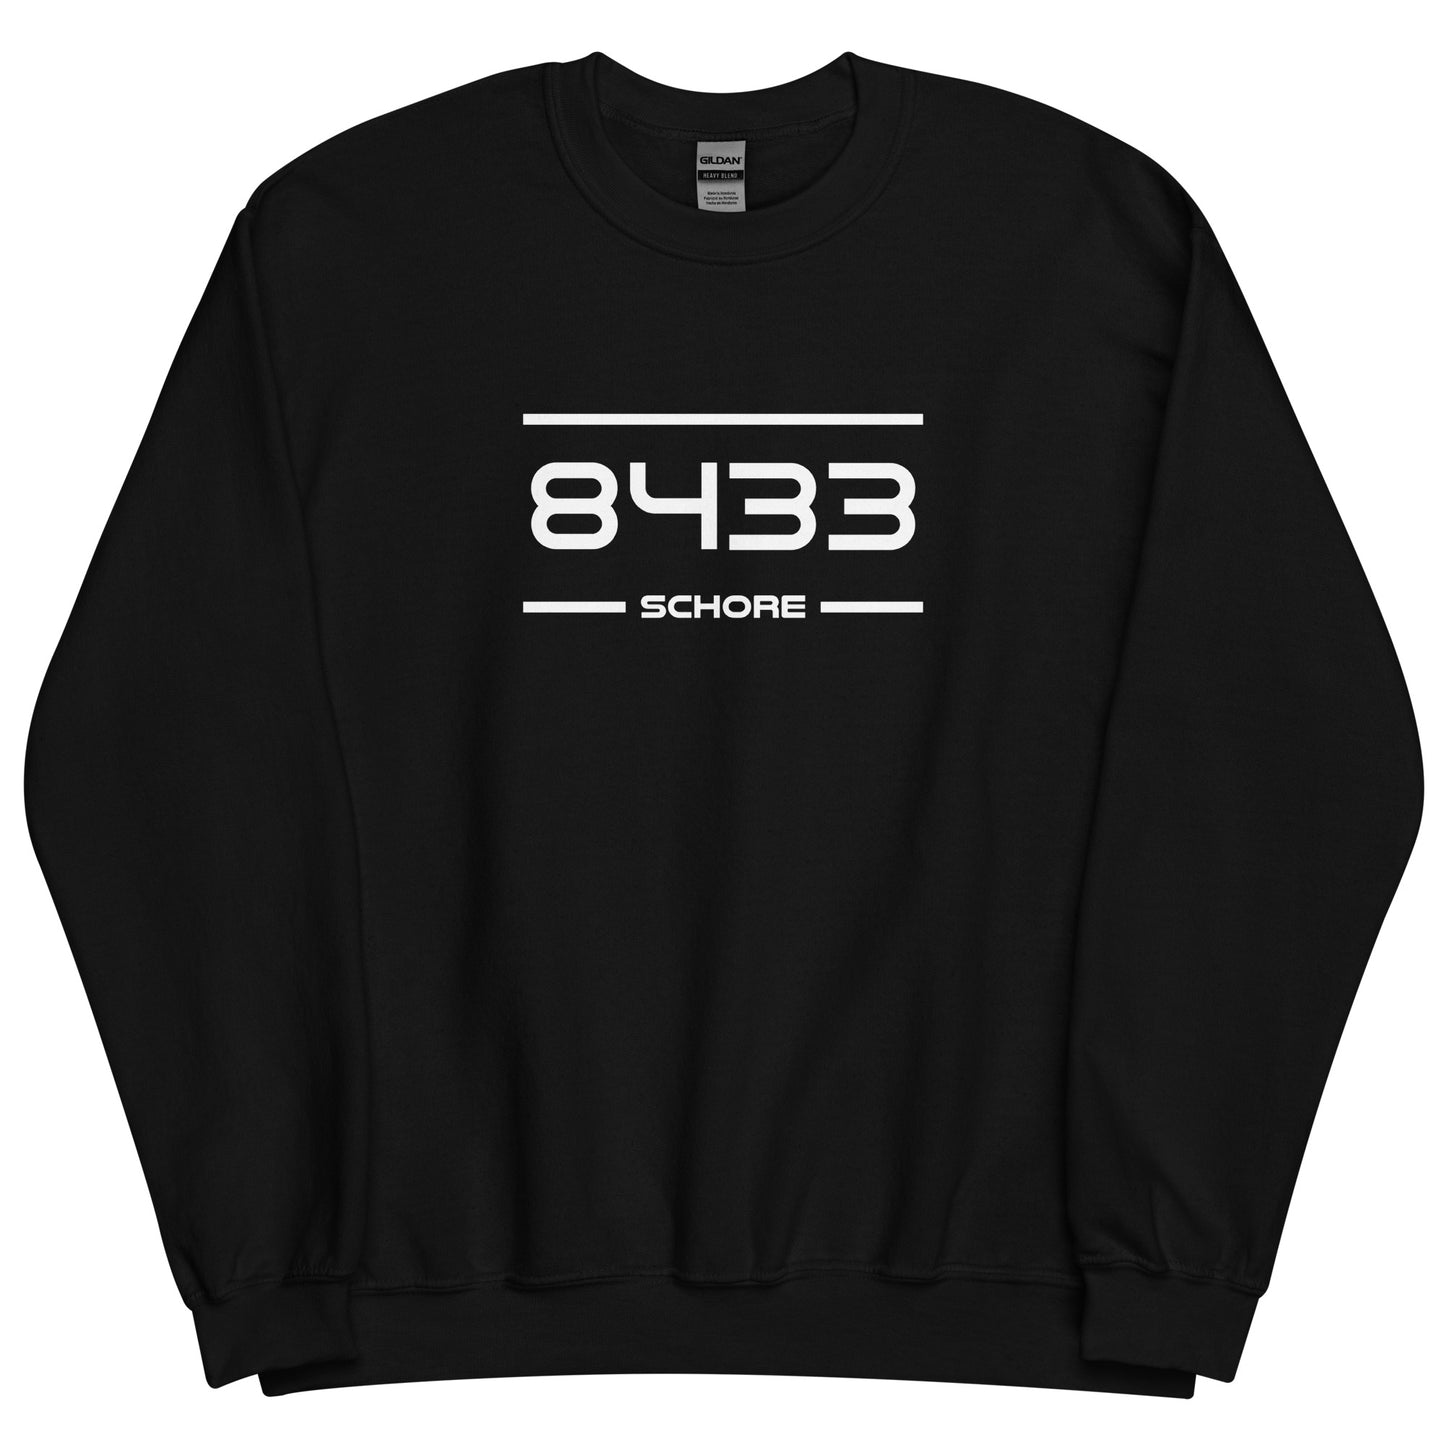 Sweater - 8433 - Schore (M/V)